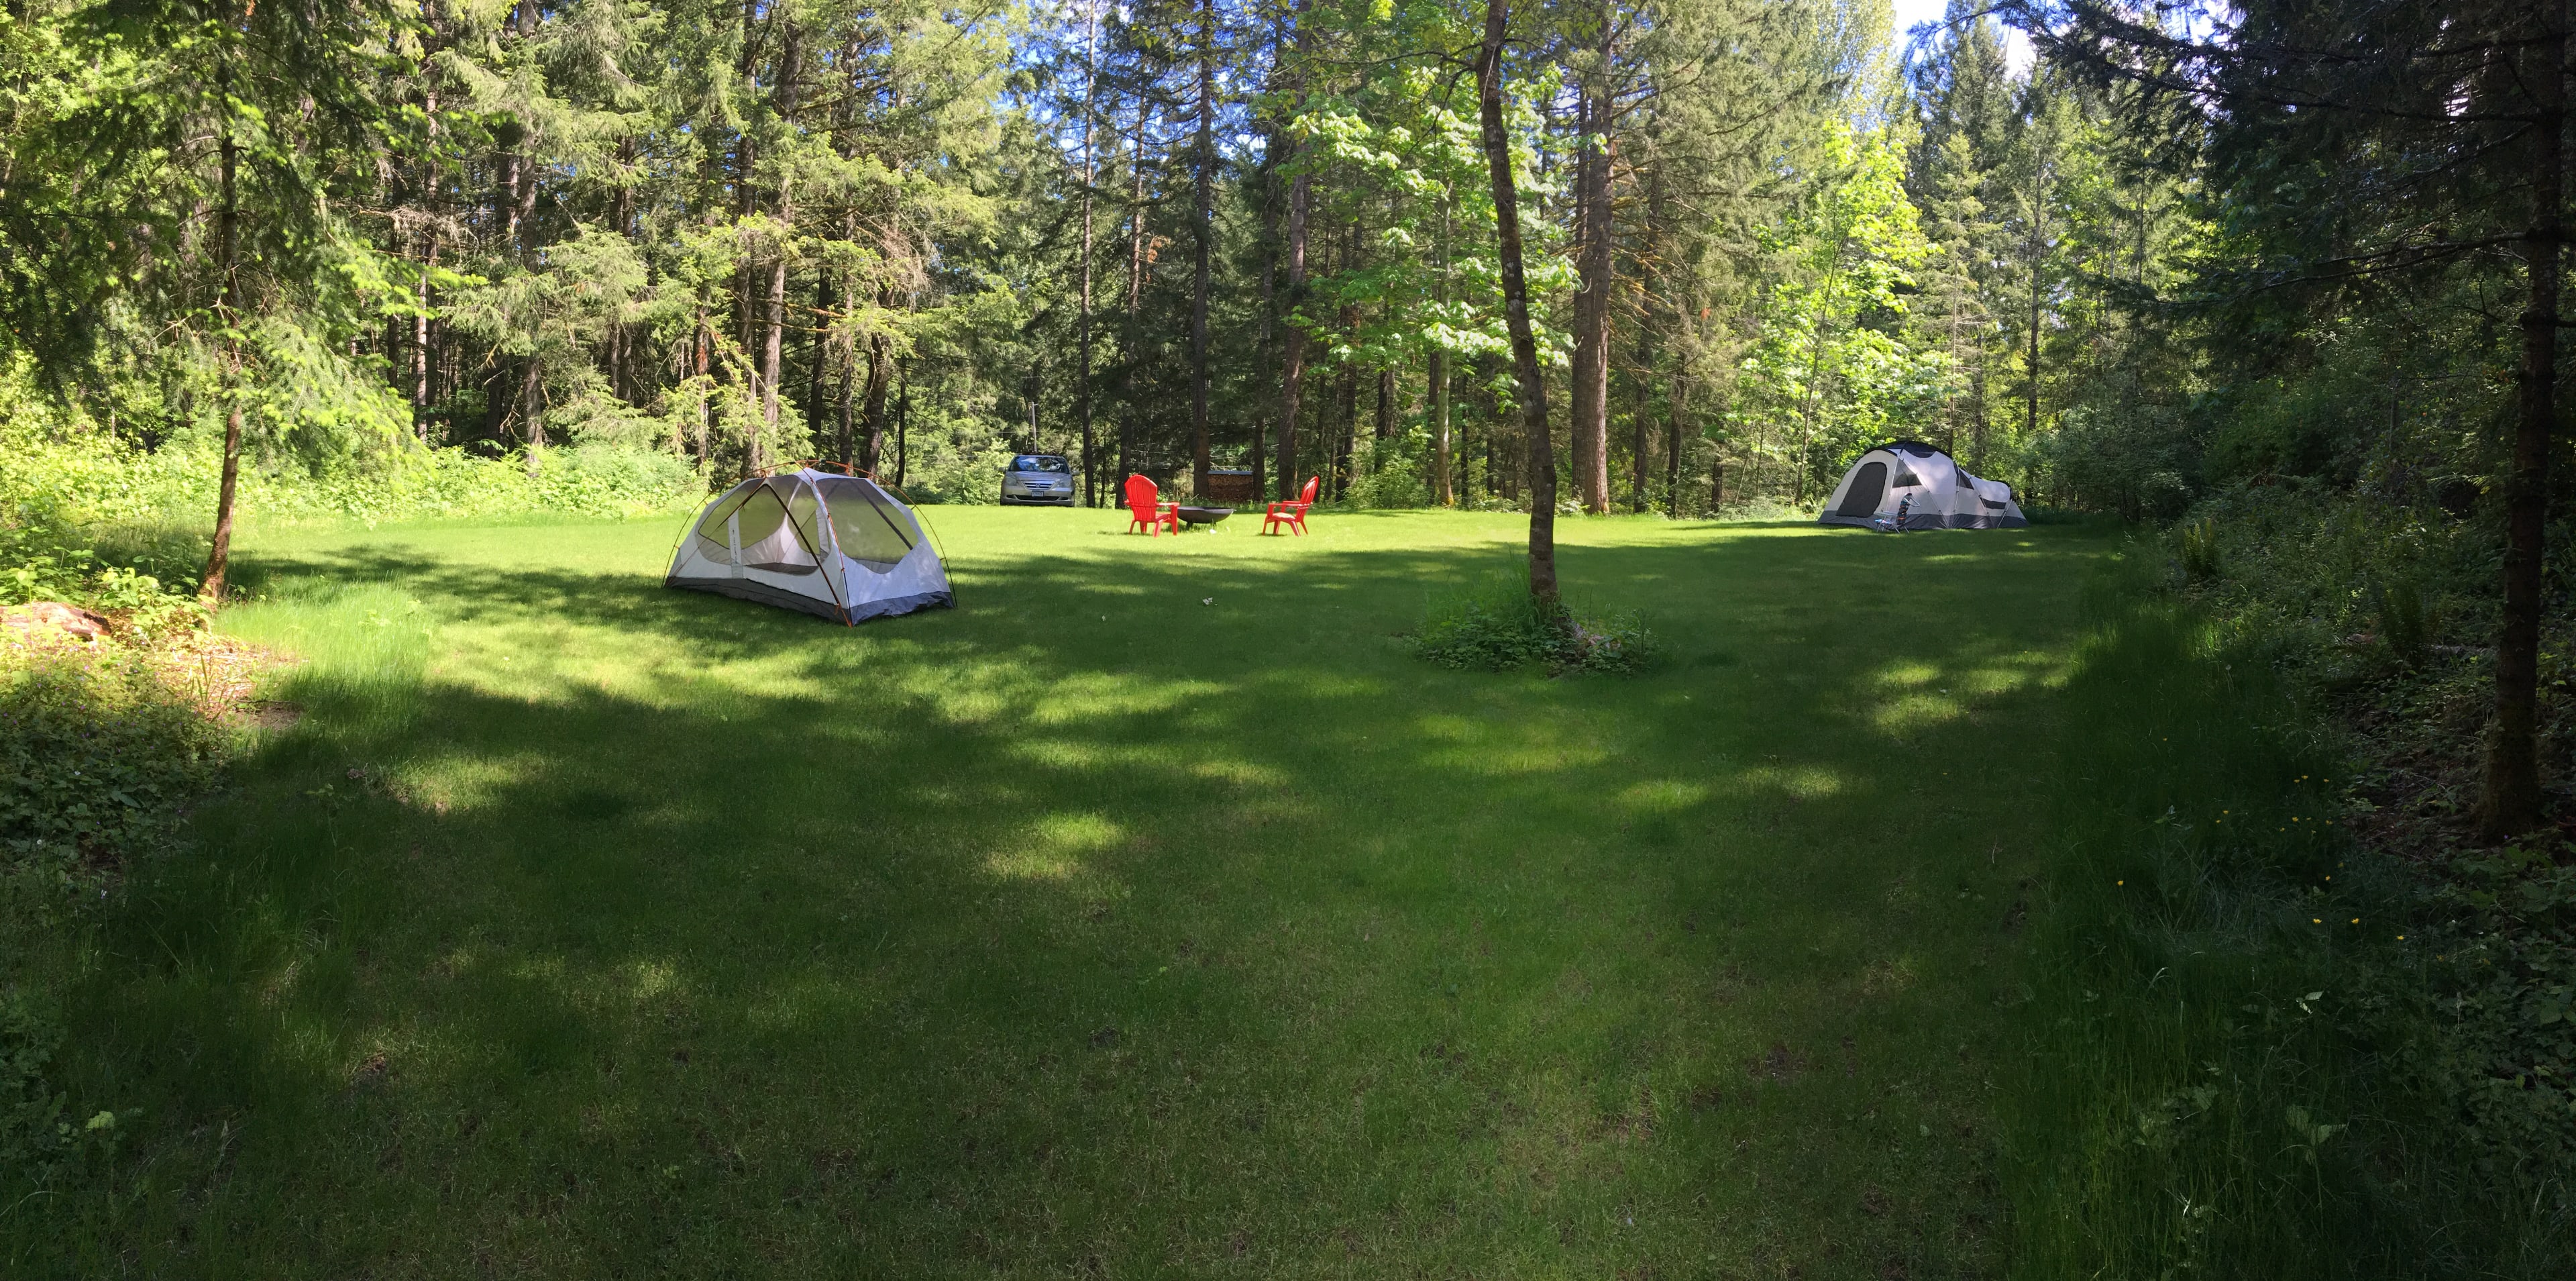  View of campsite from northwest corner.